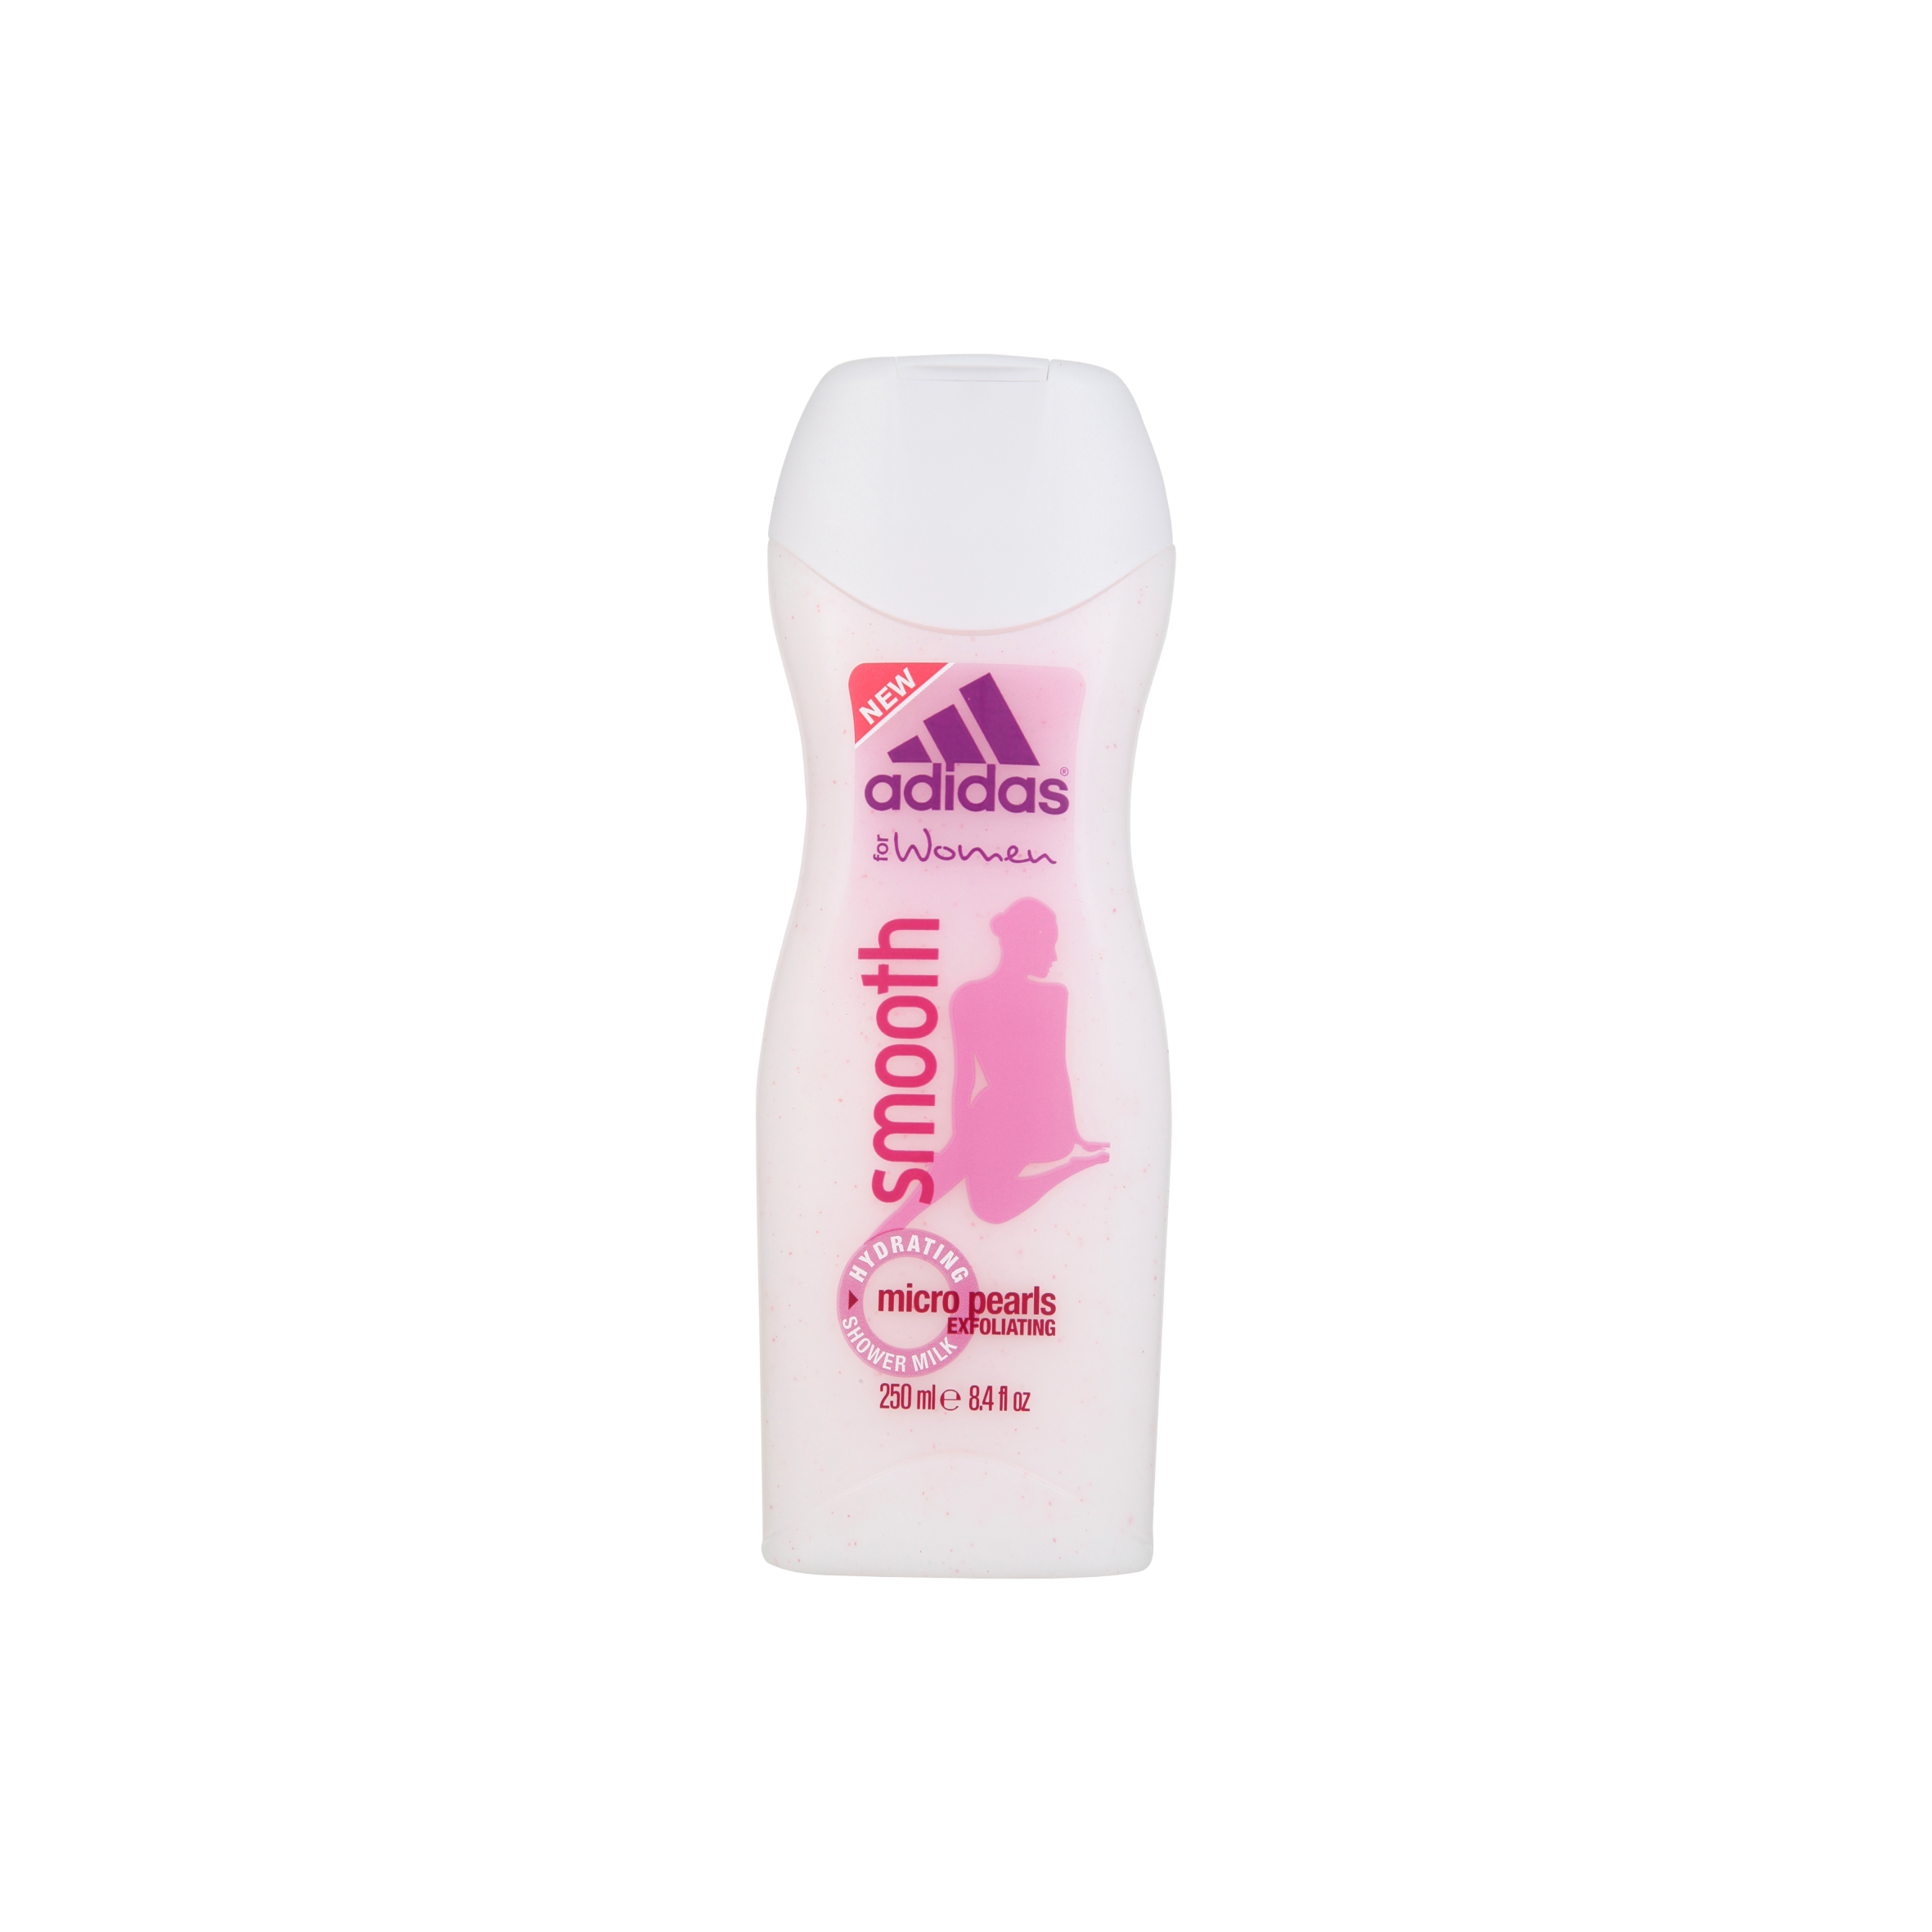 adidas smooth shower milk